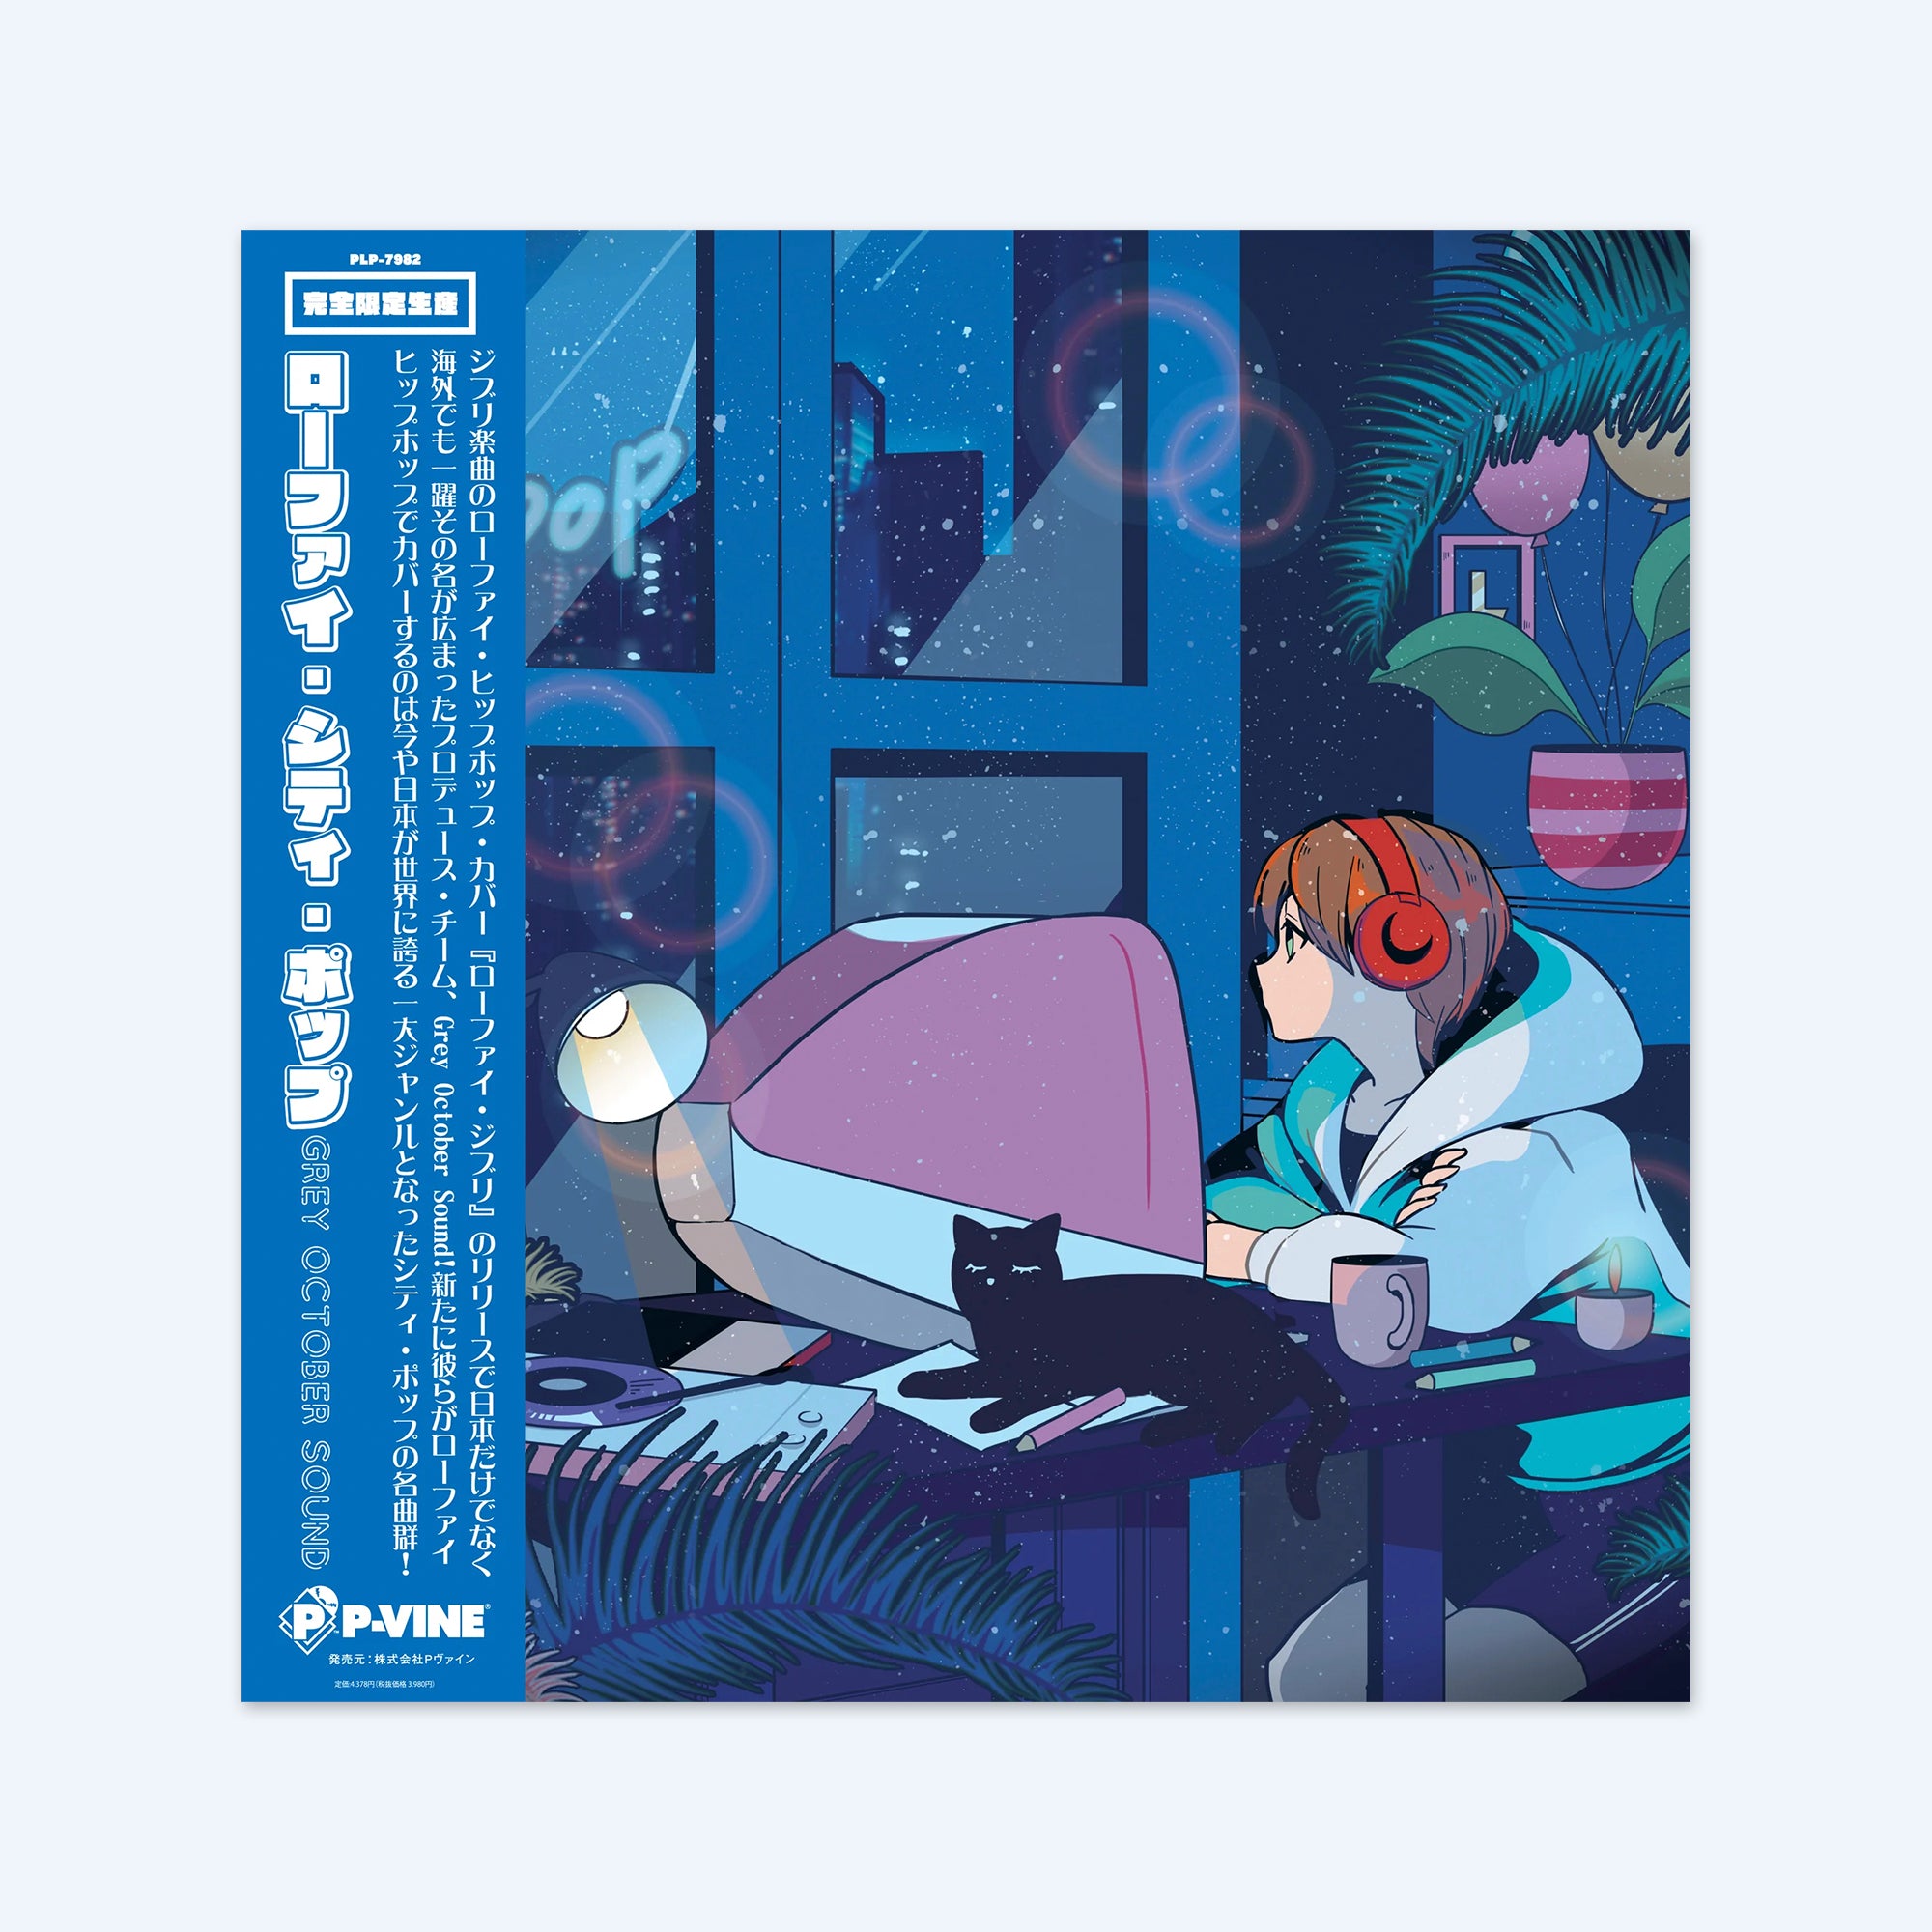 Anime Soundtracks on Vinyls: Lo-Fi & More | iiZO